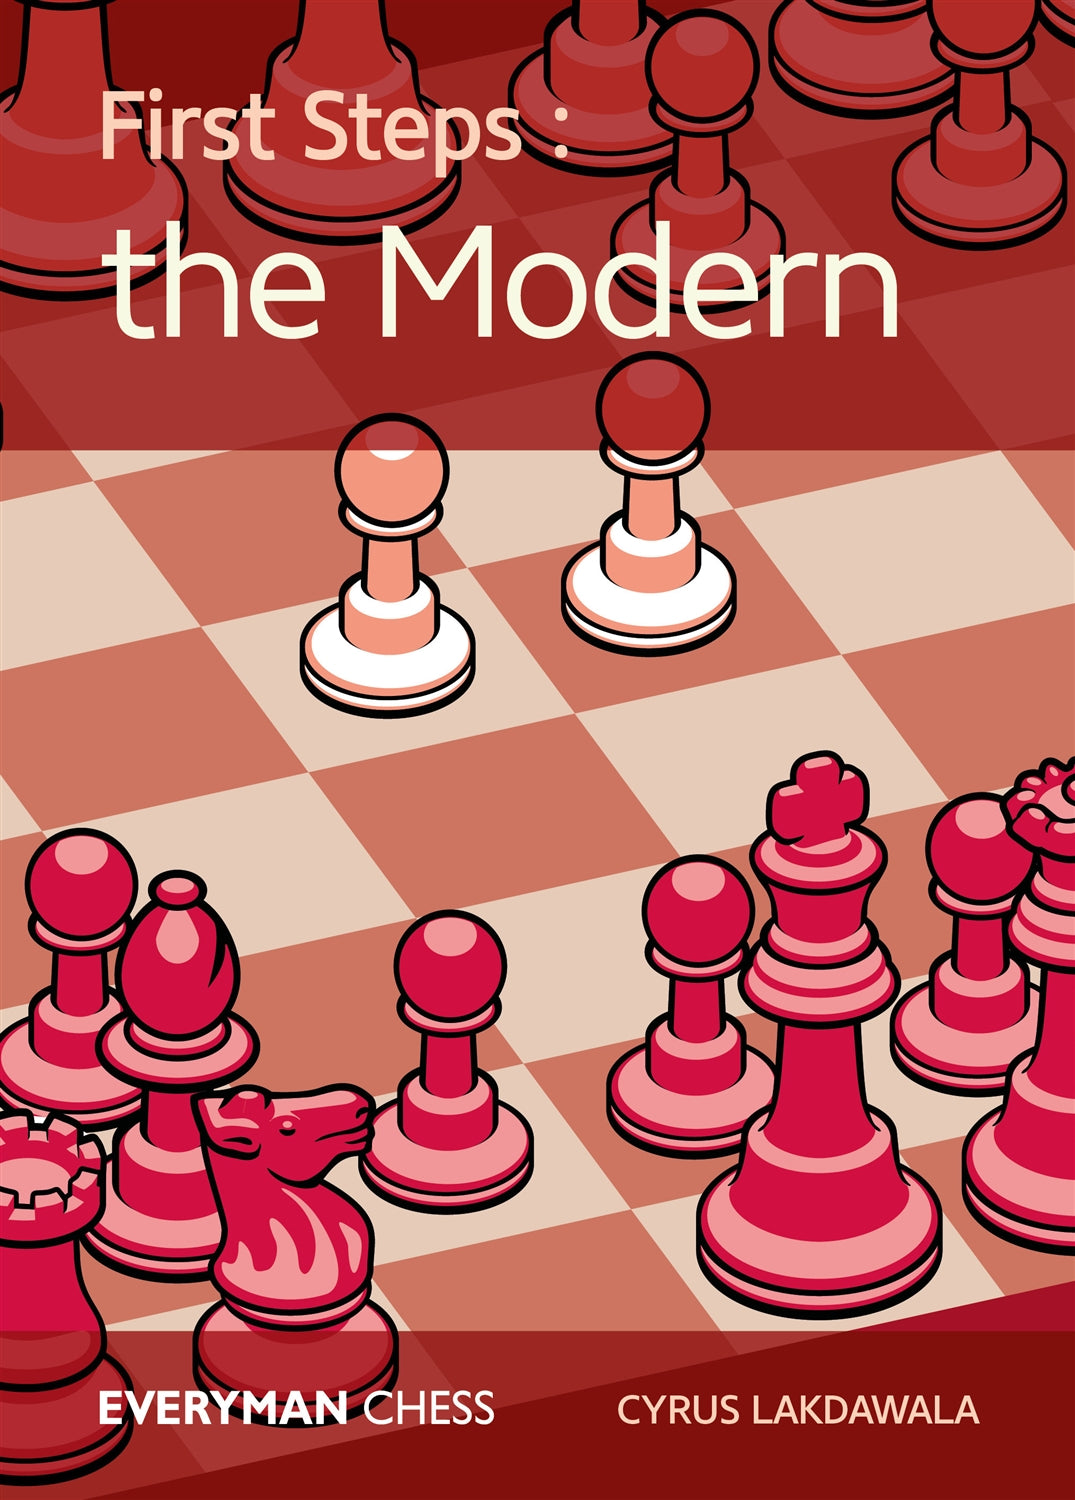 chess books cbv format